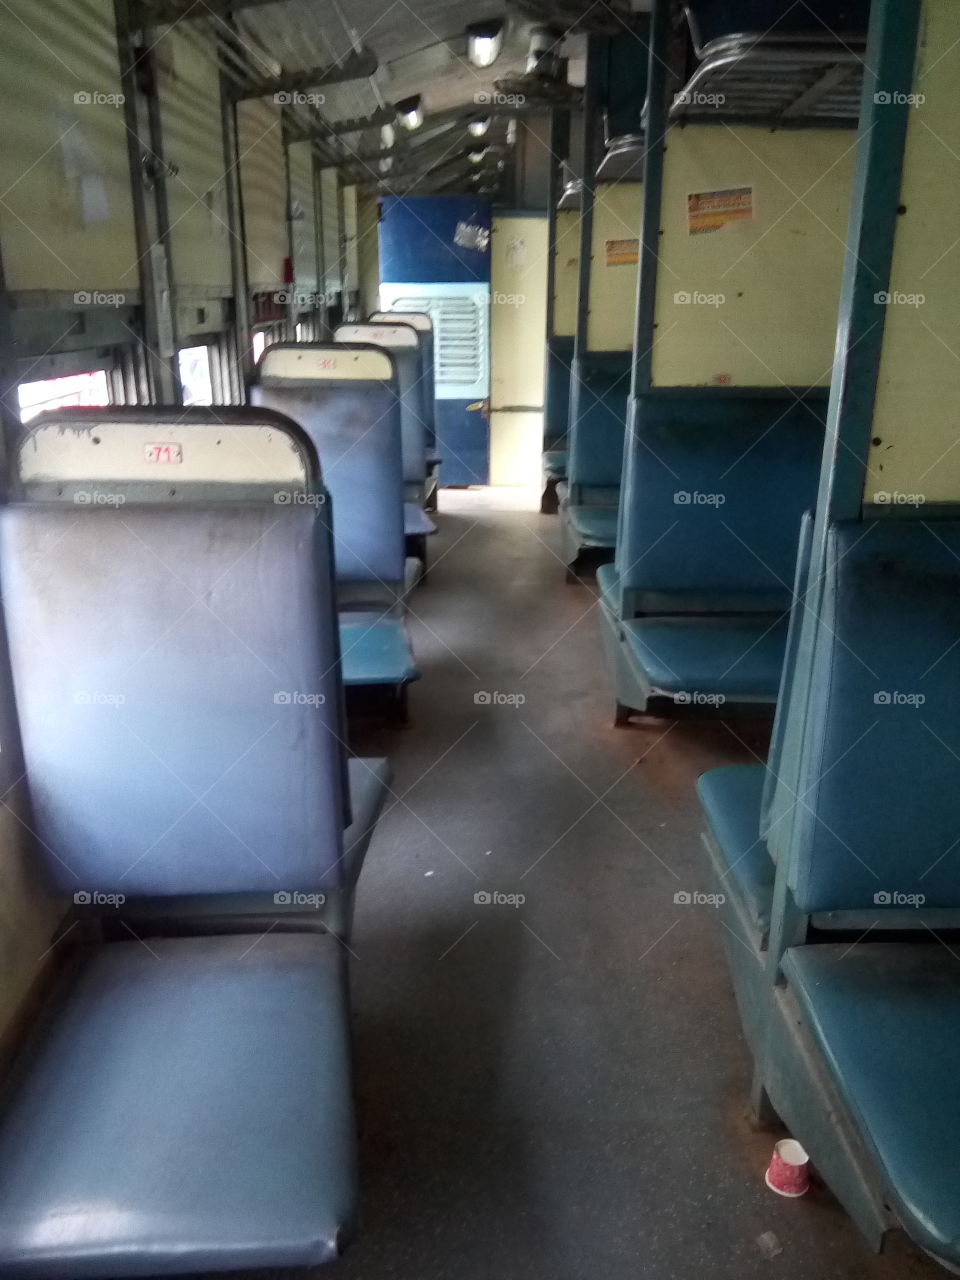 Passenger compartment of a train inIndia.